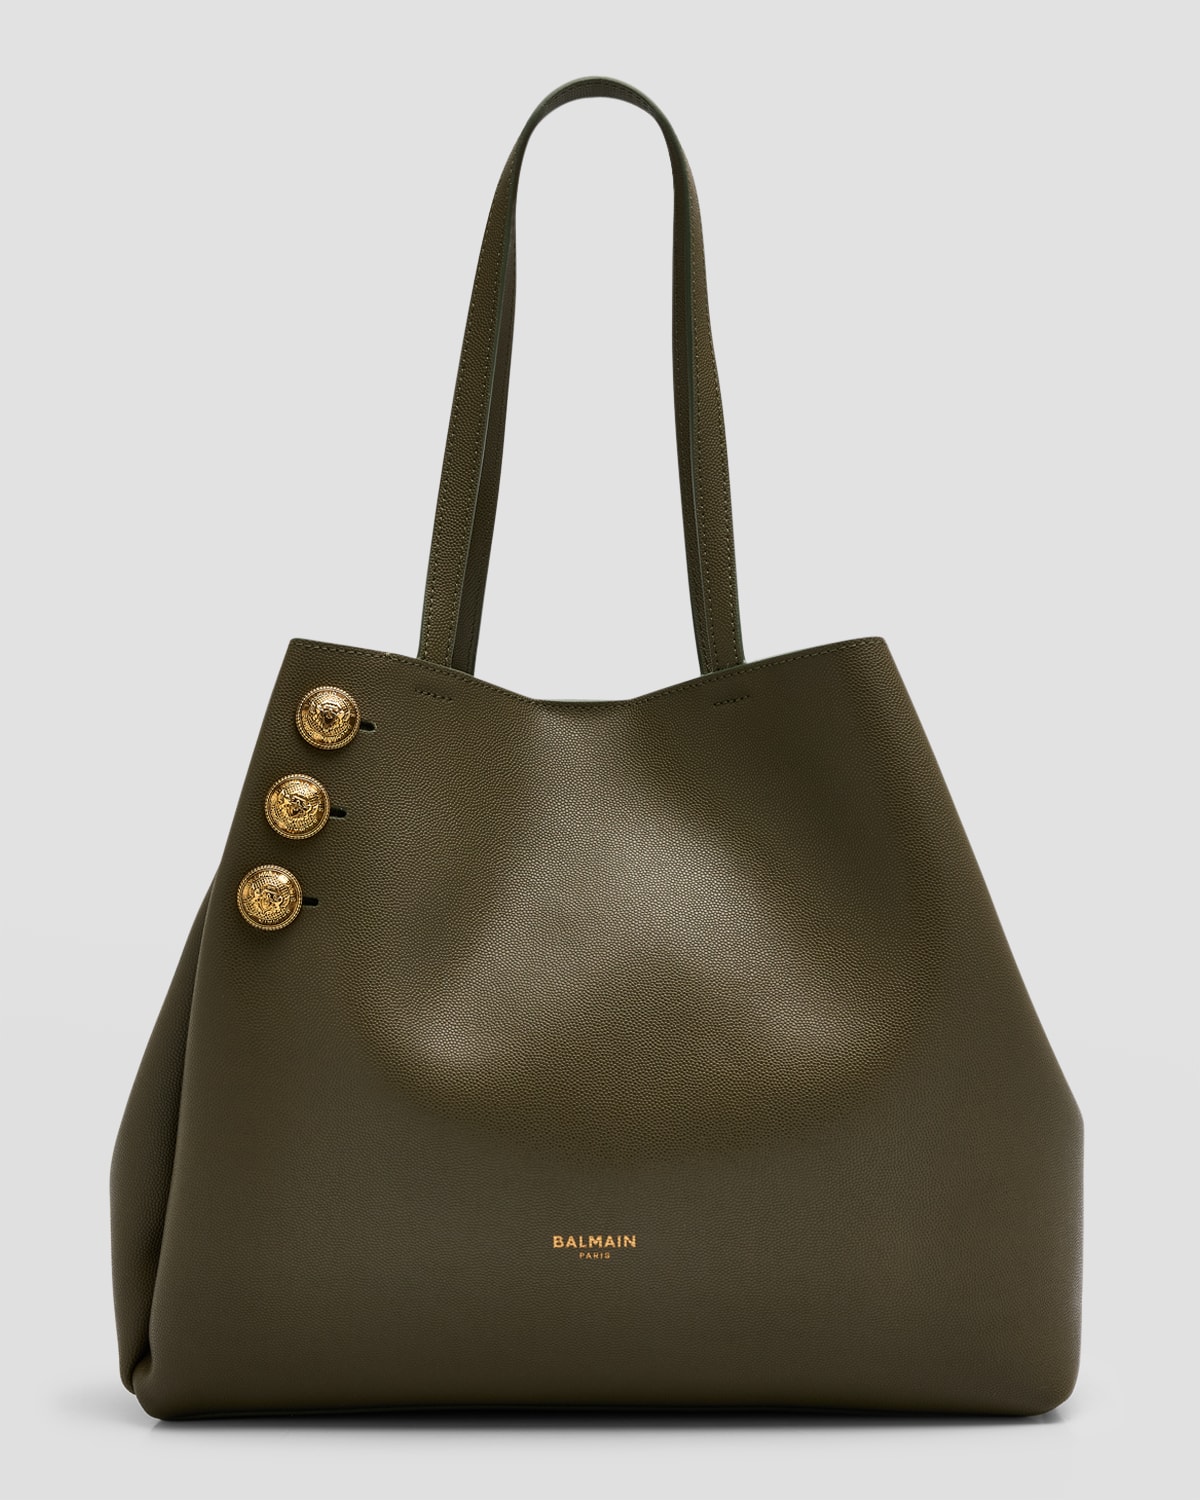 Balmain Embleme Shopper Tote Bag in Grained Leather